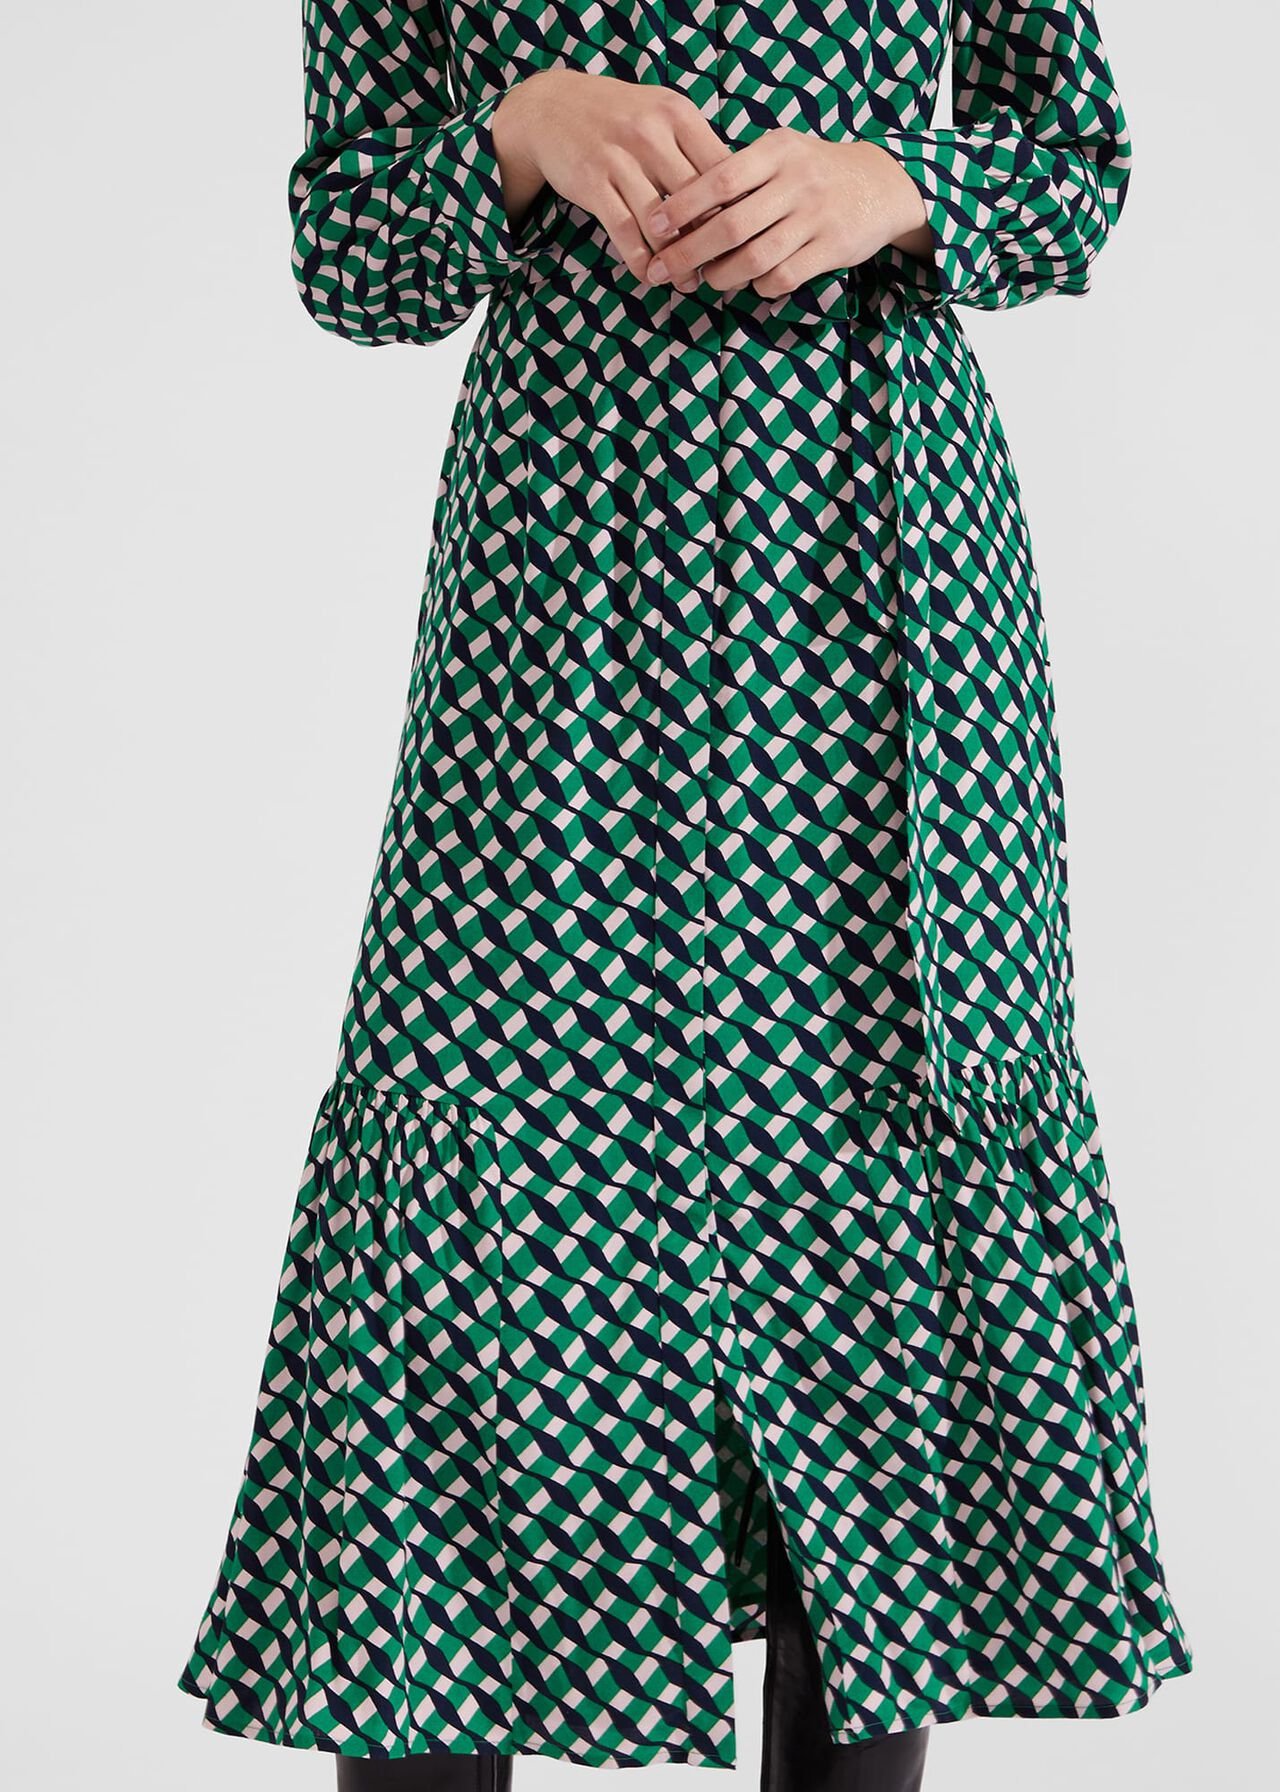 Petite Emberly Dress, Green Multi, hi-res